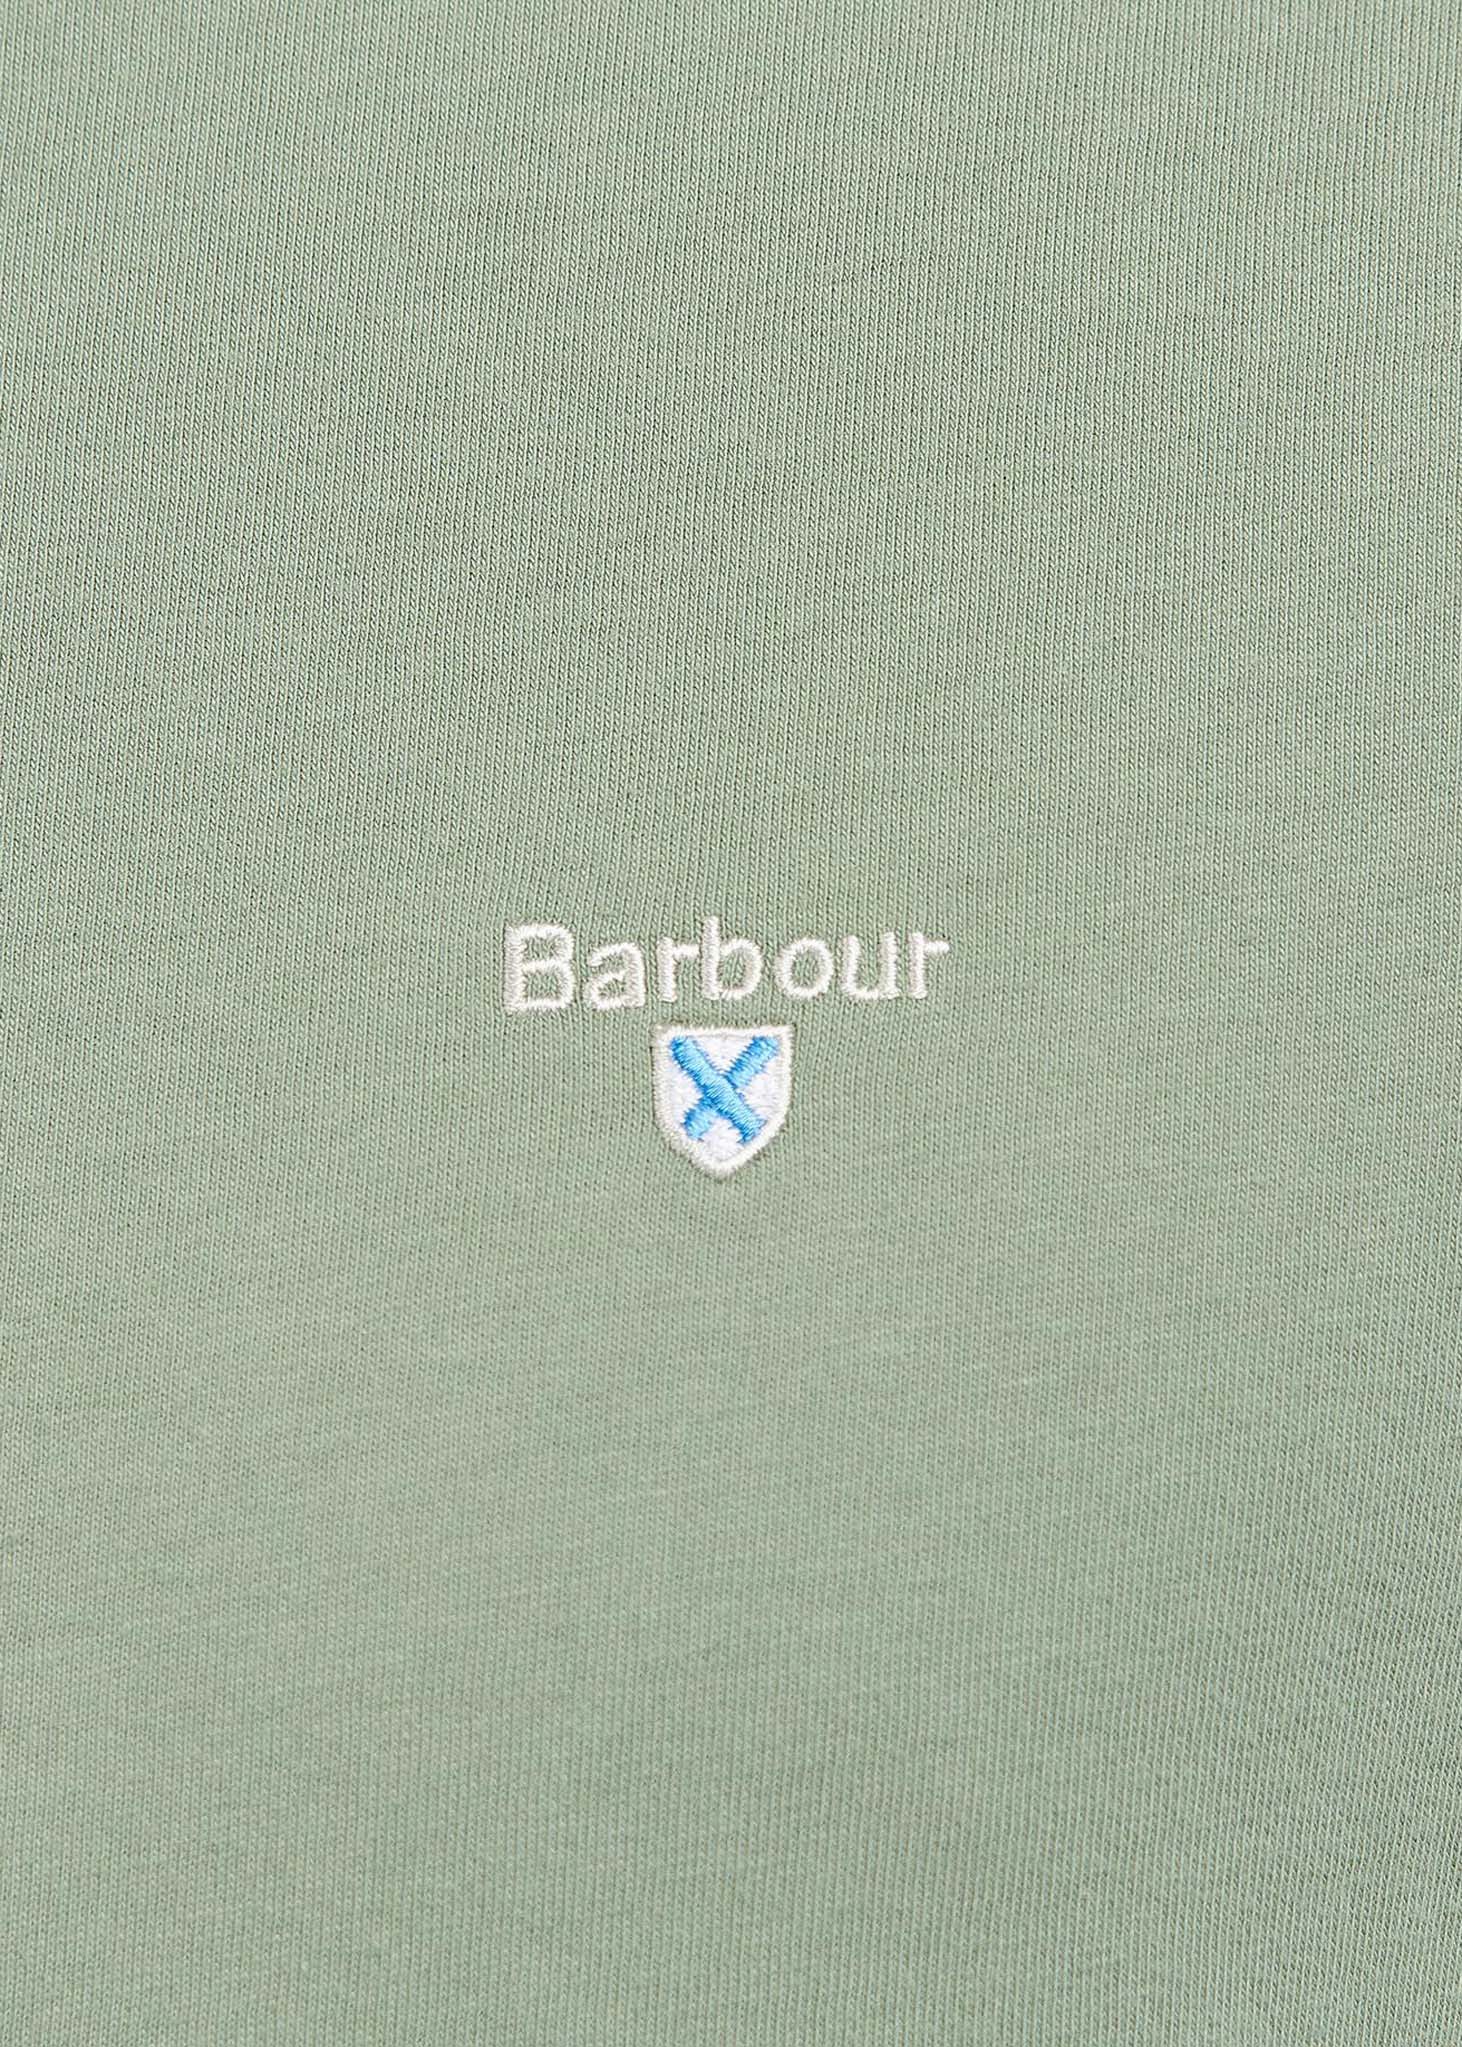 barbour sports tee tartan green